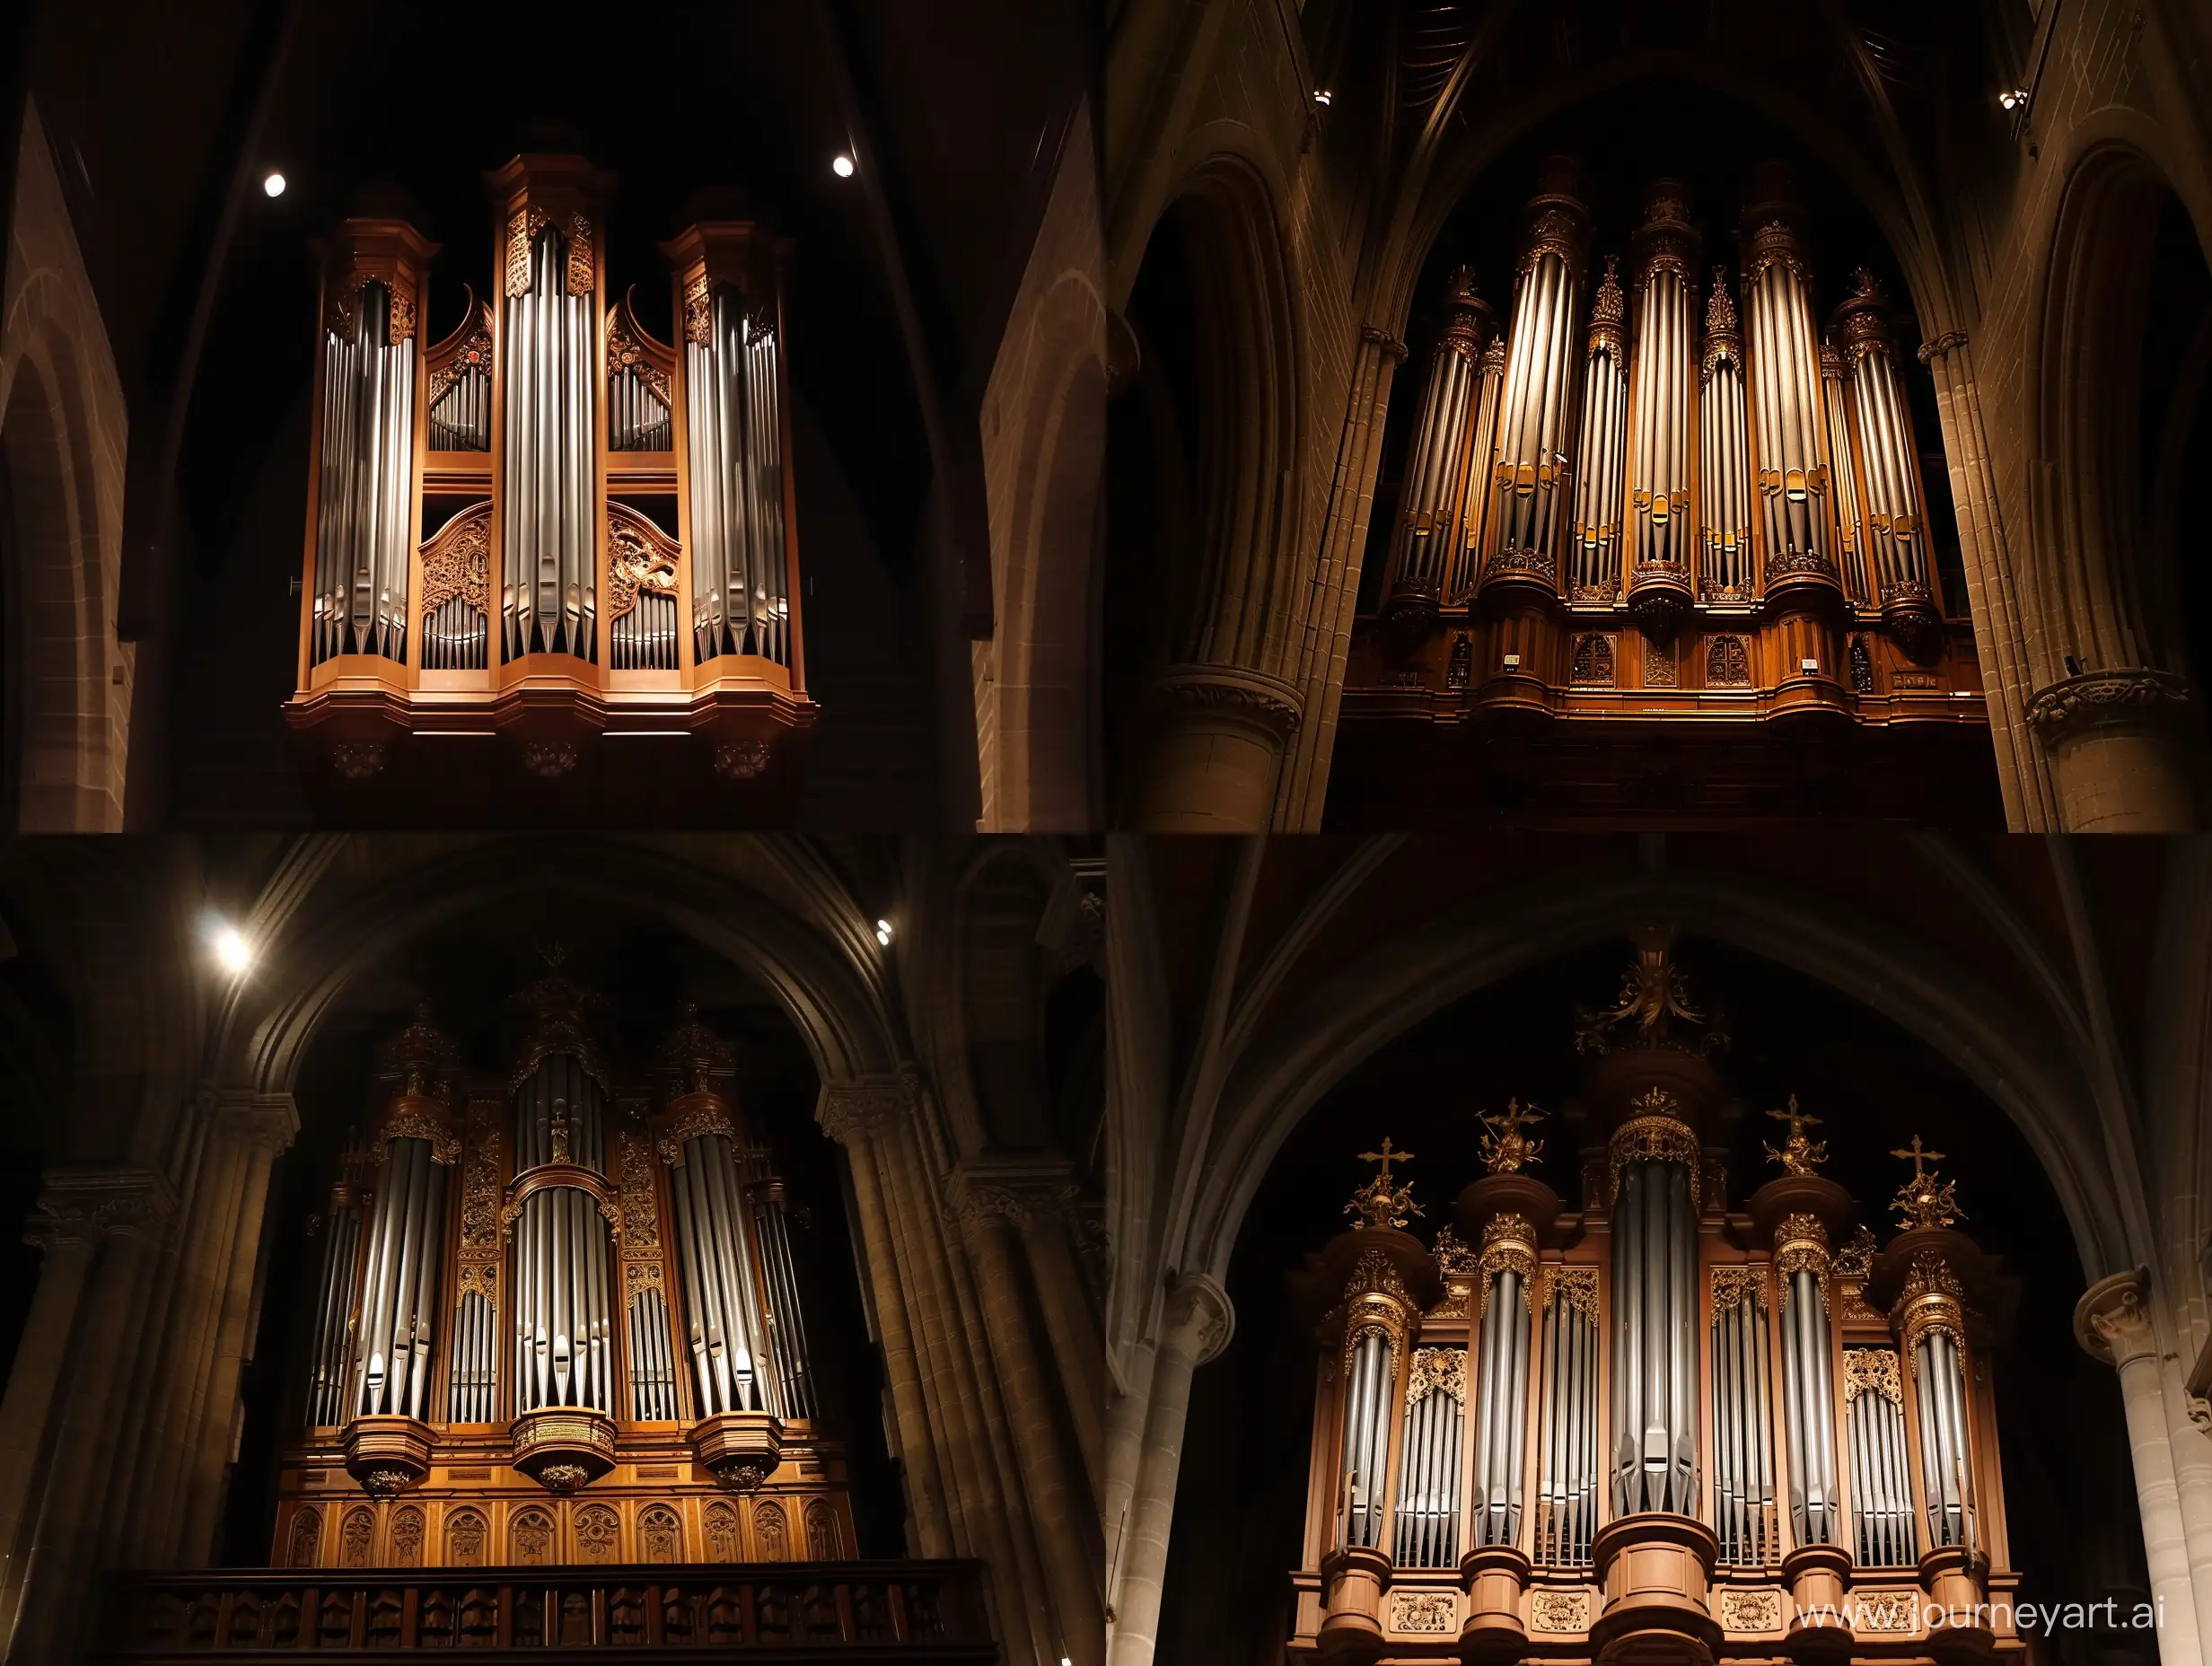 Elegant-Pipe-Organ-Illuminated-in-Cathedrals-Dark-Hall